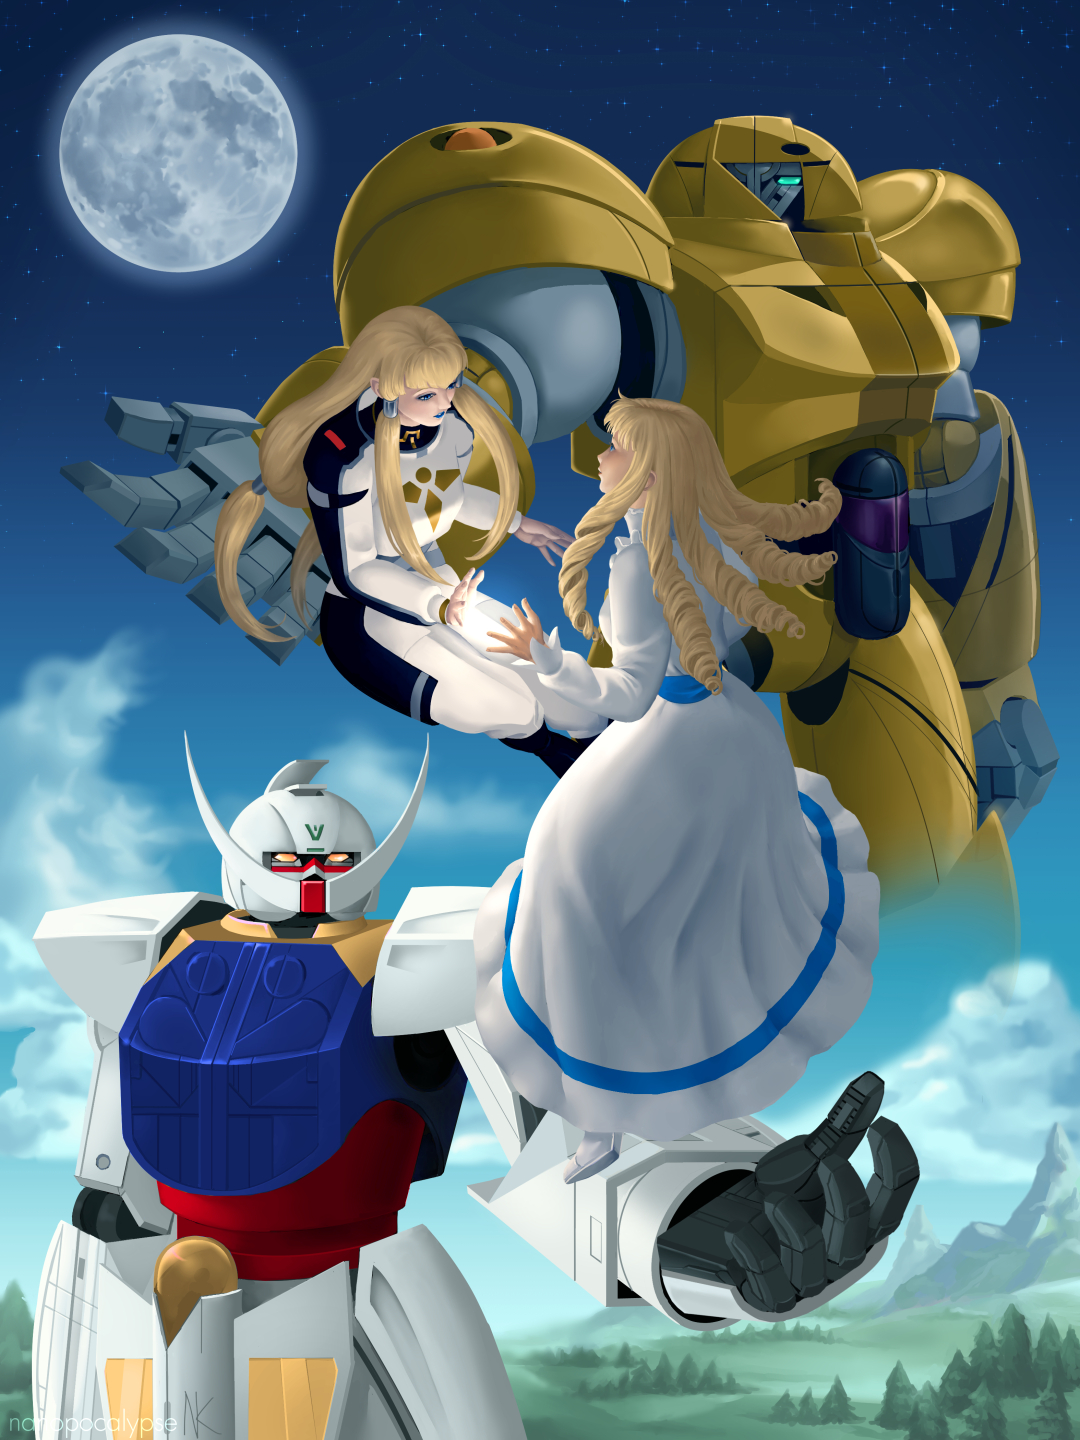 Meeting of Earth and Moon - ∀ Gundam 20th anniversary - Clip Studio Paint, 2020